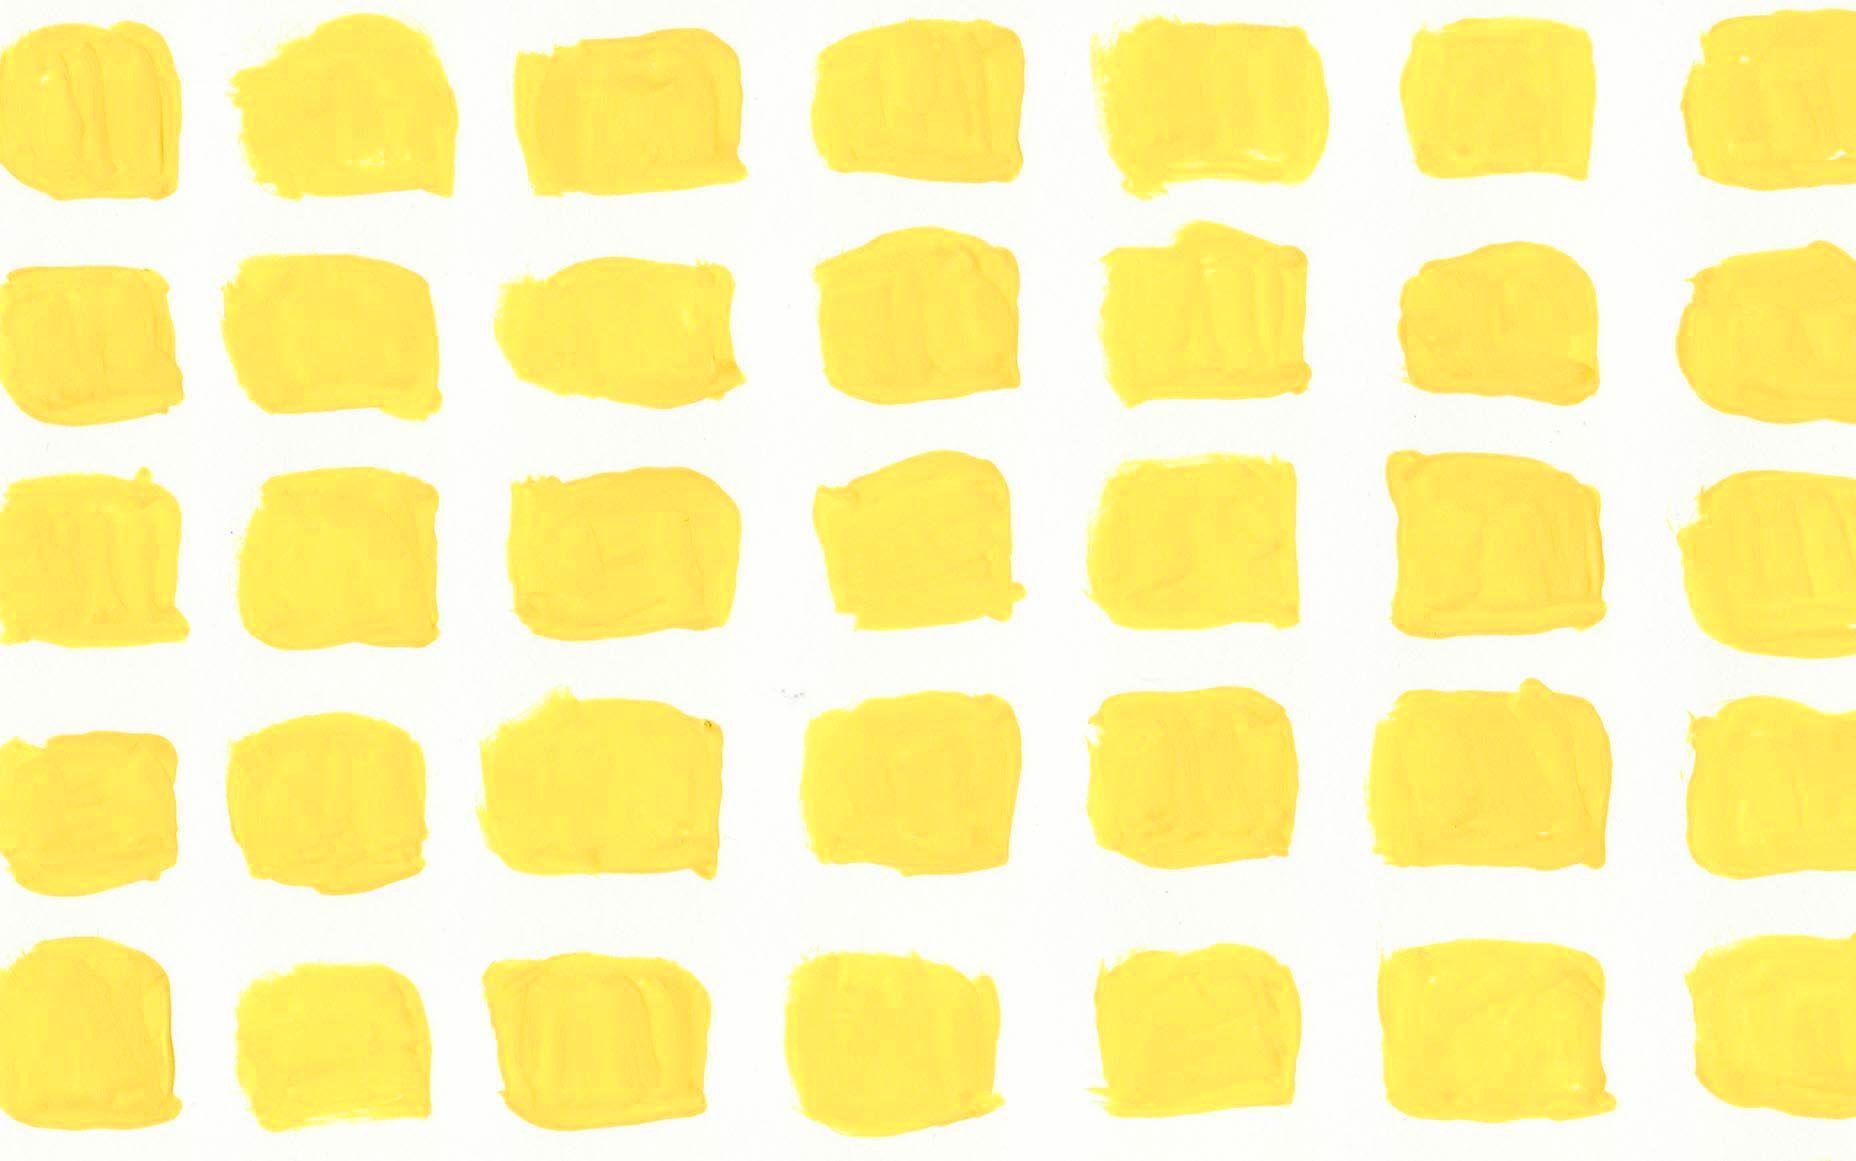 Pastel Yellow Aesthetic Desktop Wallpaper Free Pastel Yellow Aesthetic Desktop Background